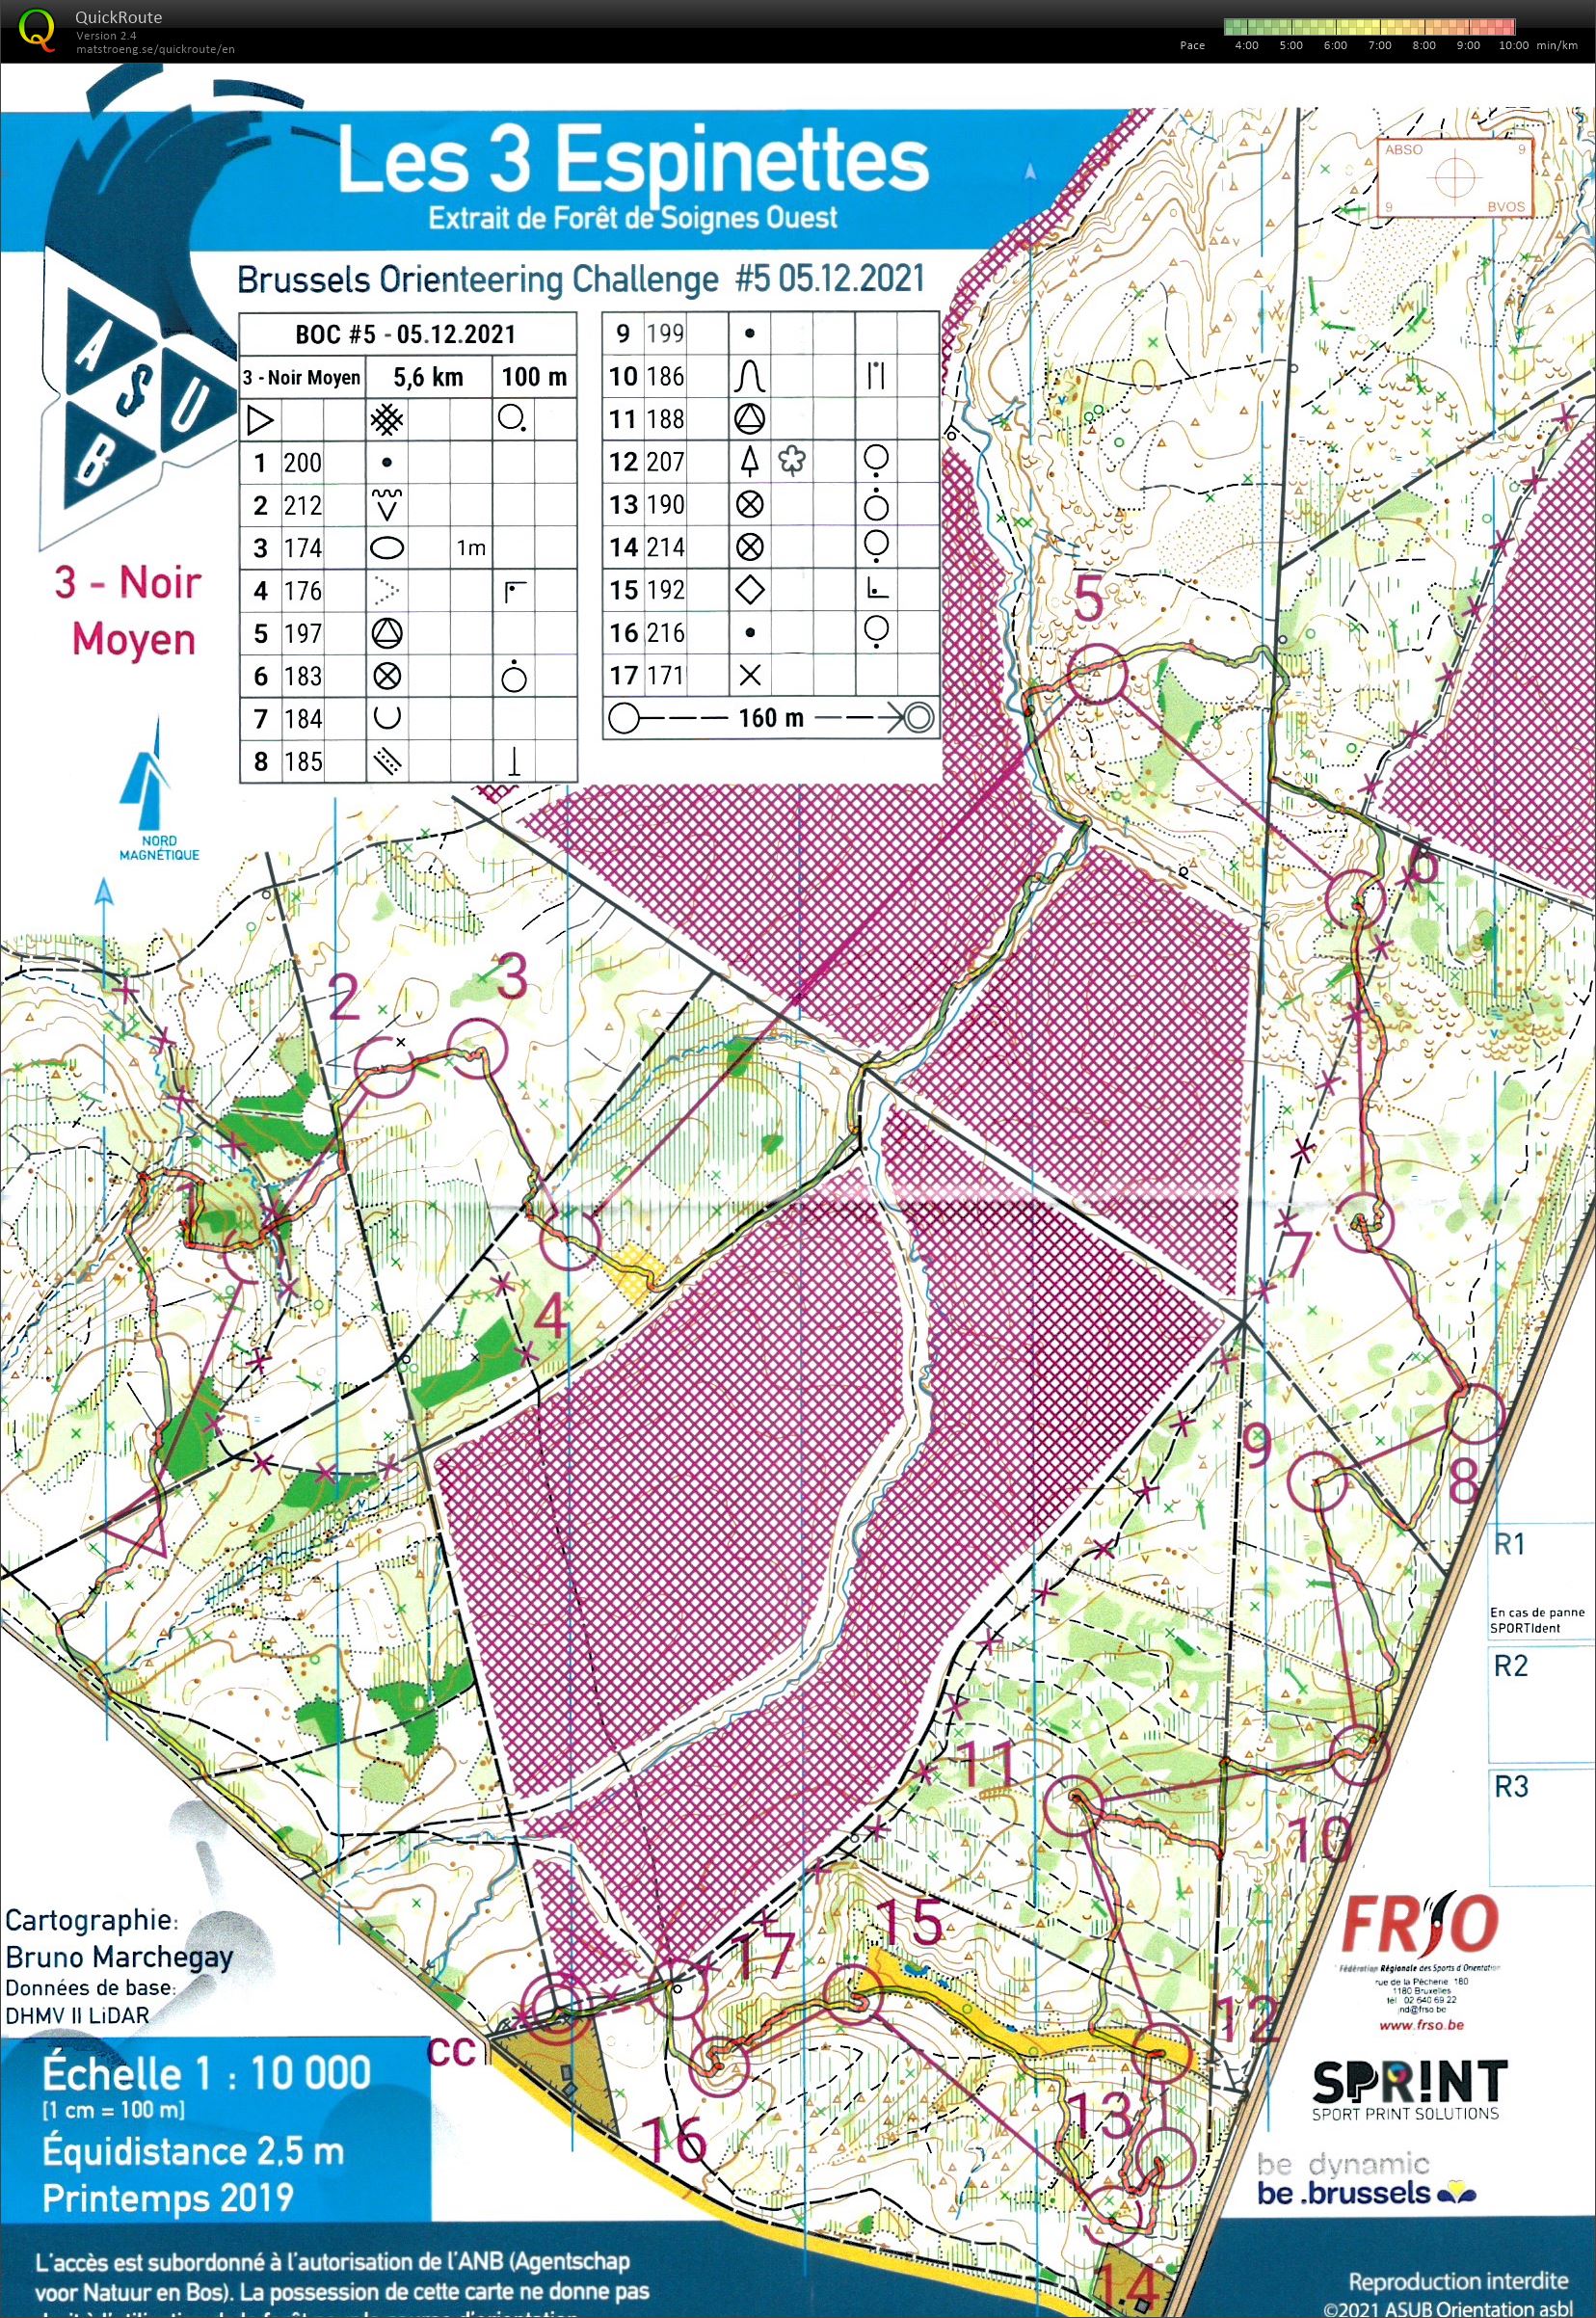 Brussels Orienteering Challenge - Sint-Genesius-Rode (05/12/2021)